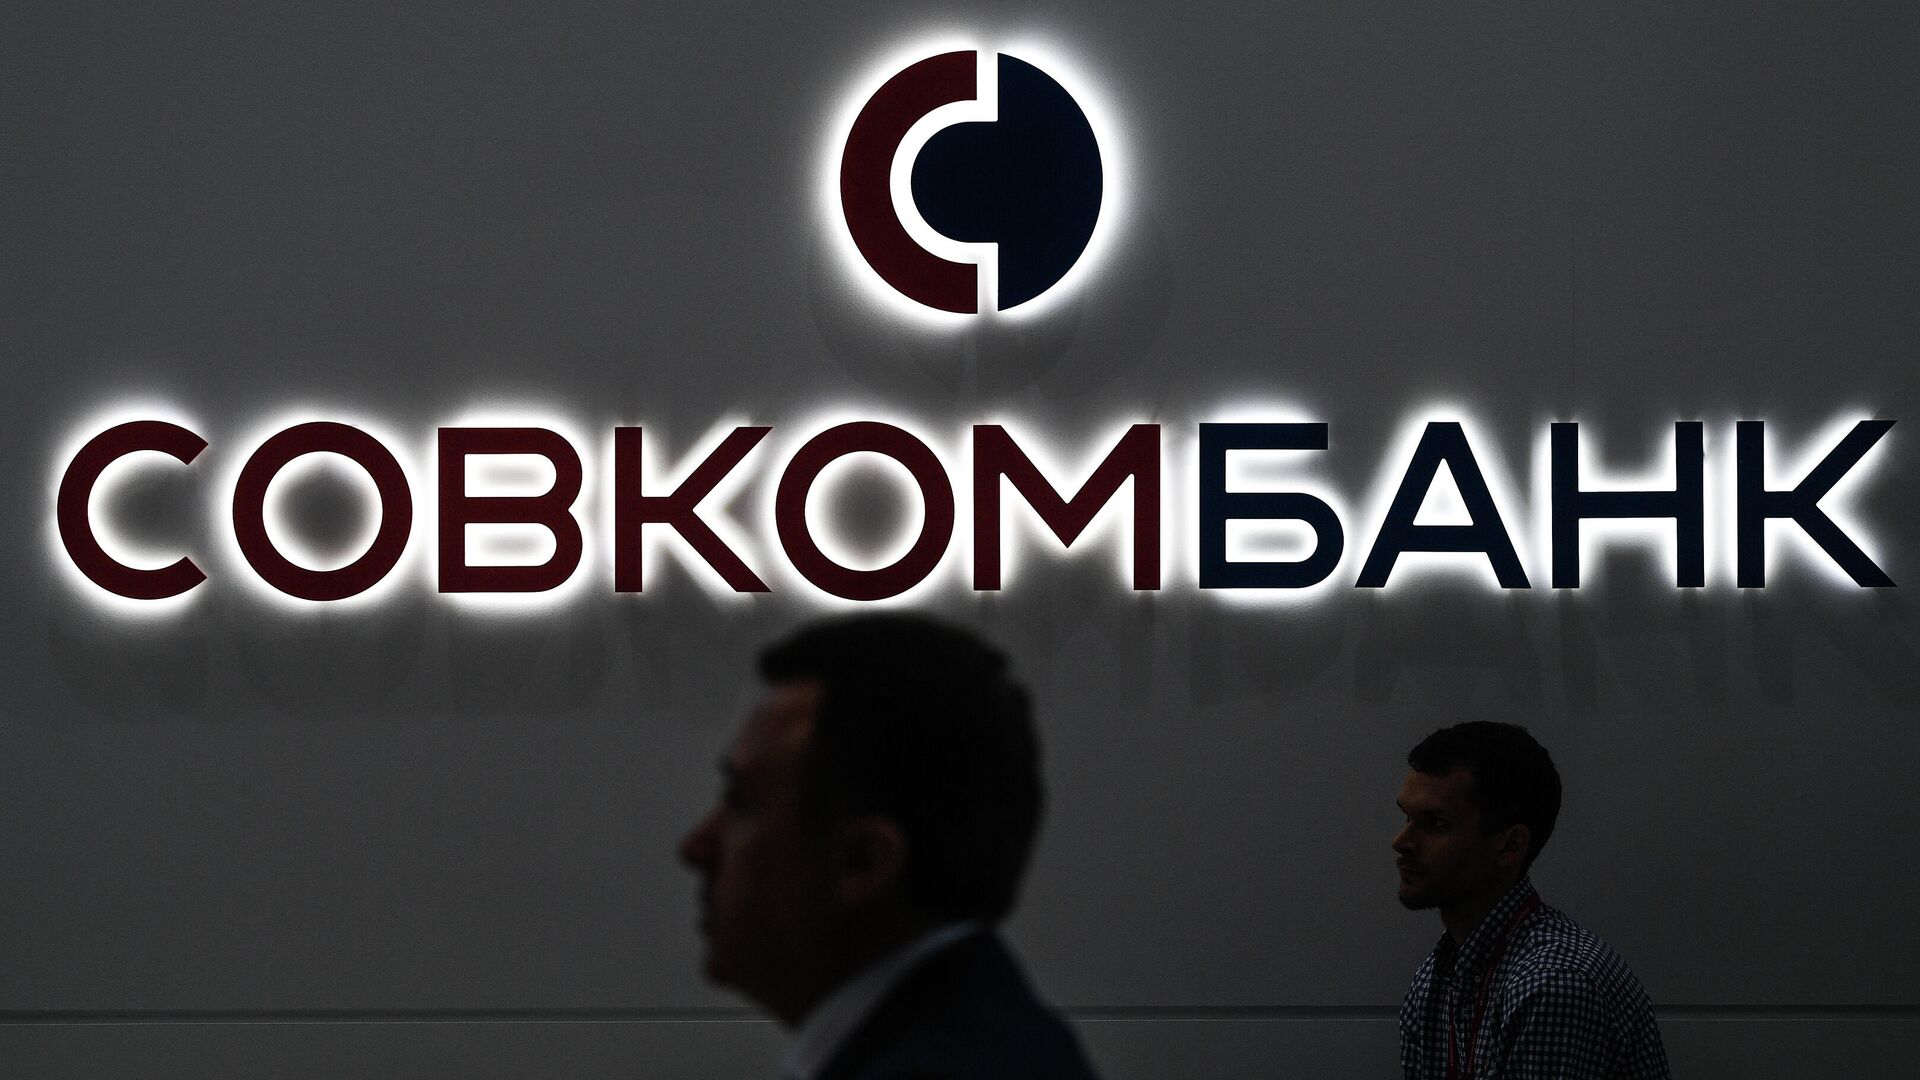 Совкомбанк отреагировал на санкции США